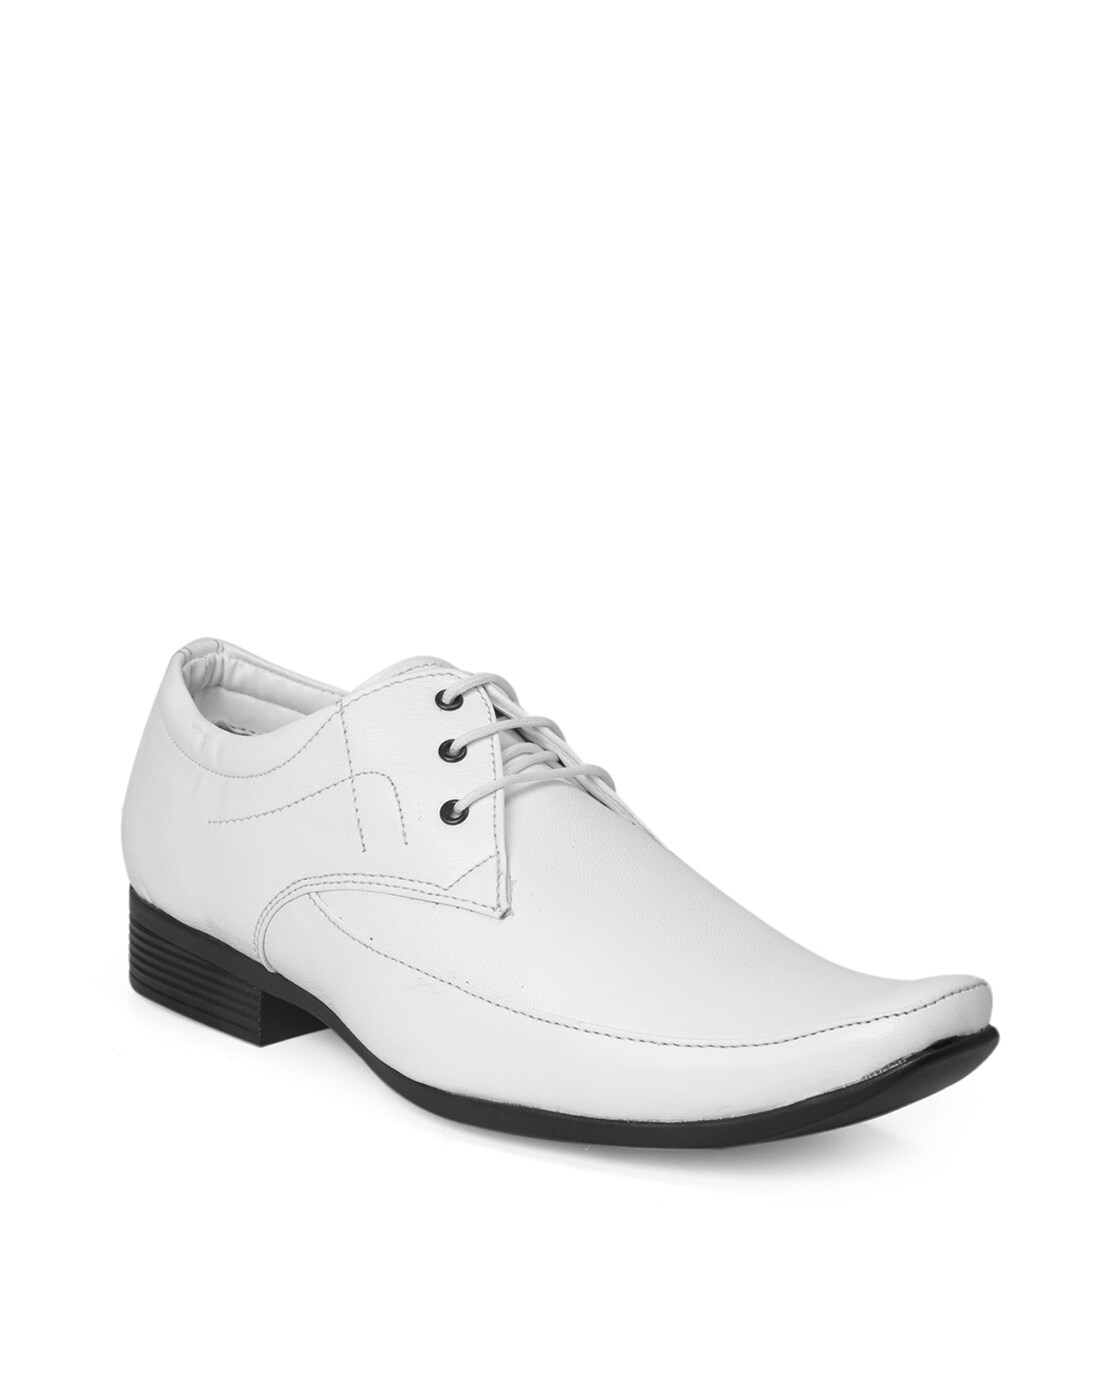 Amazon.com | Crystal Queen Women Flats Ballets Shoes White Lace Wedding  Flats Pointed Toe Plus Size Shoes Wedding Party Dress Shoes (36 M EU / 6  B(M) US, Off-White) | Flats